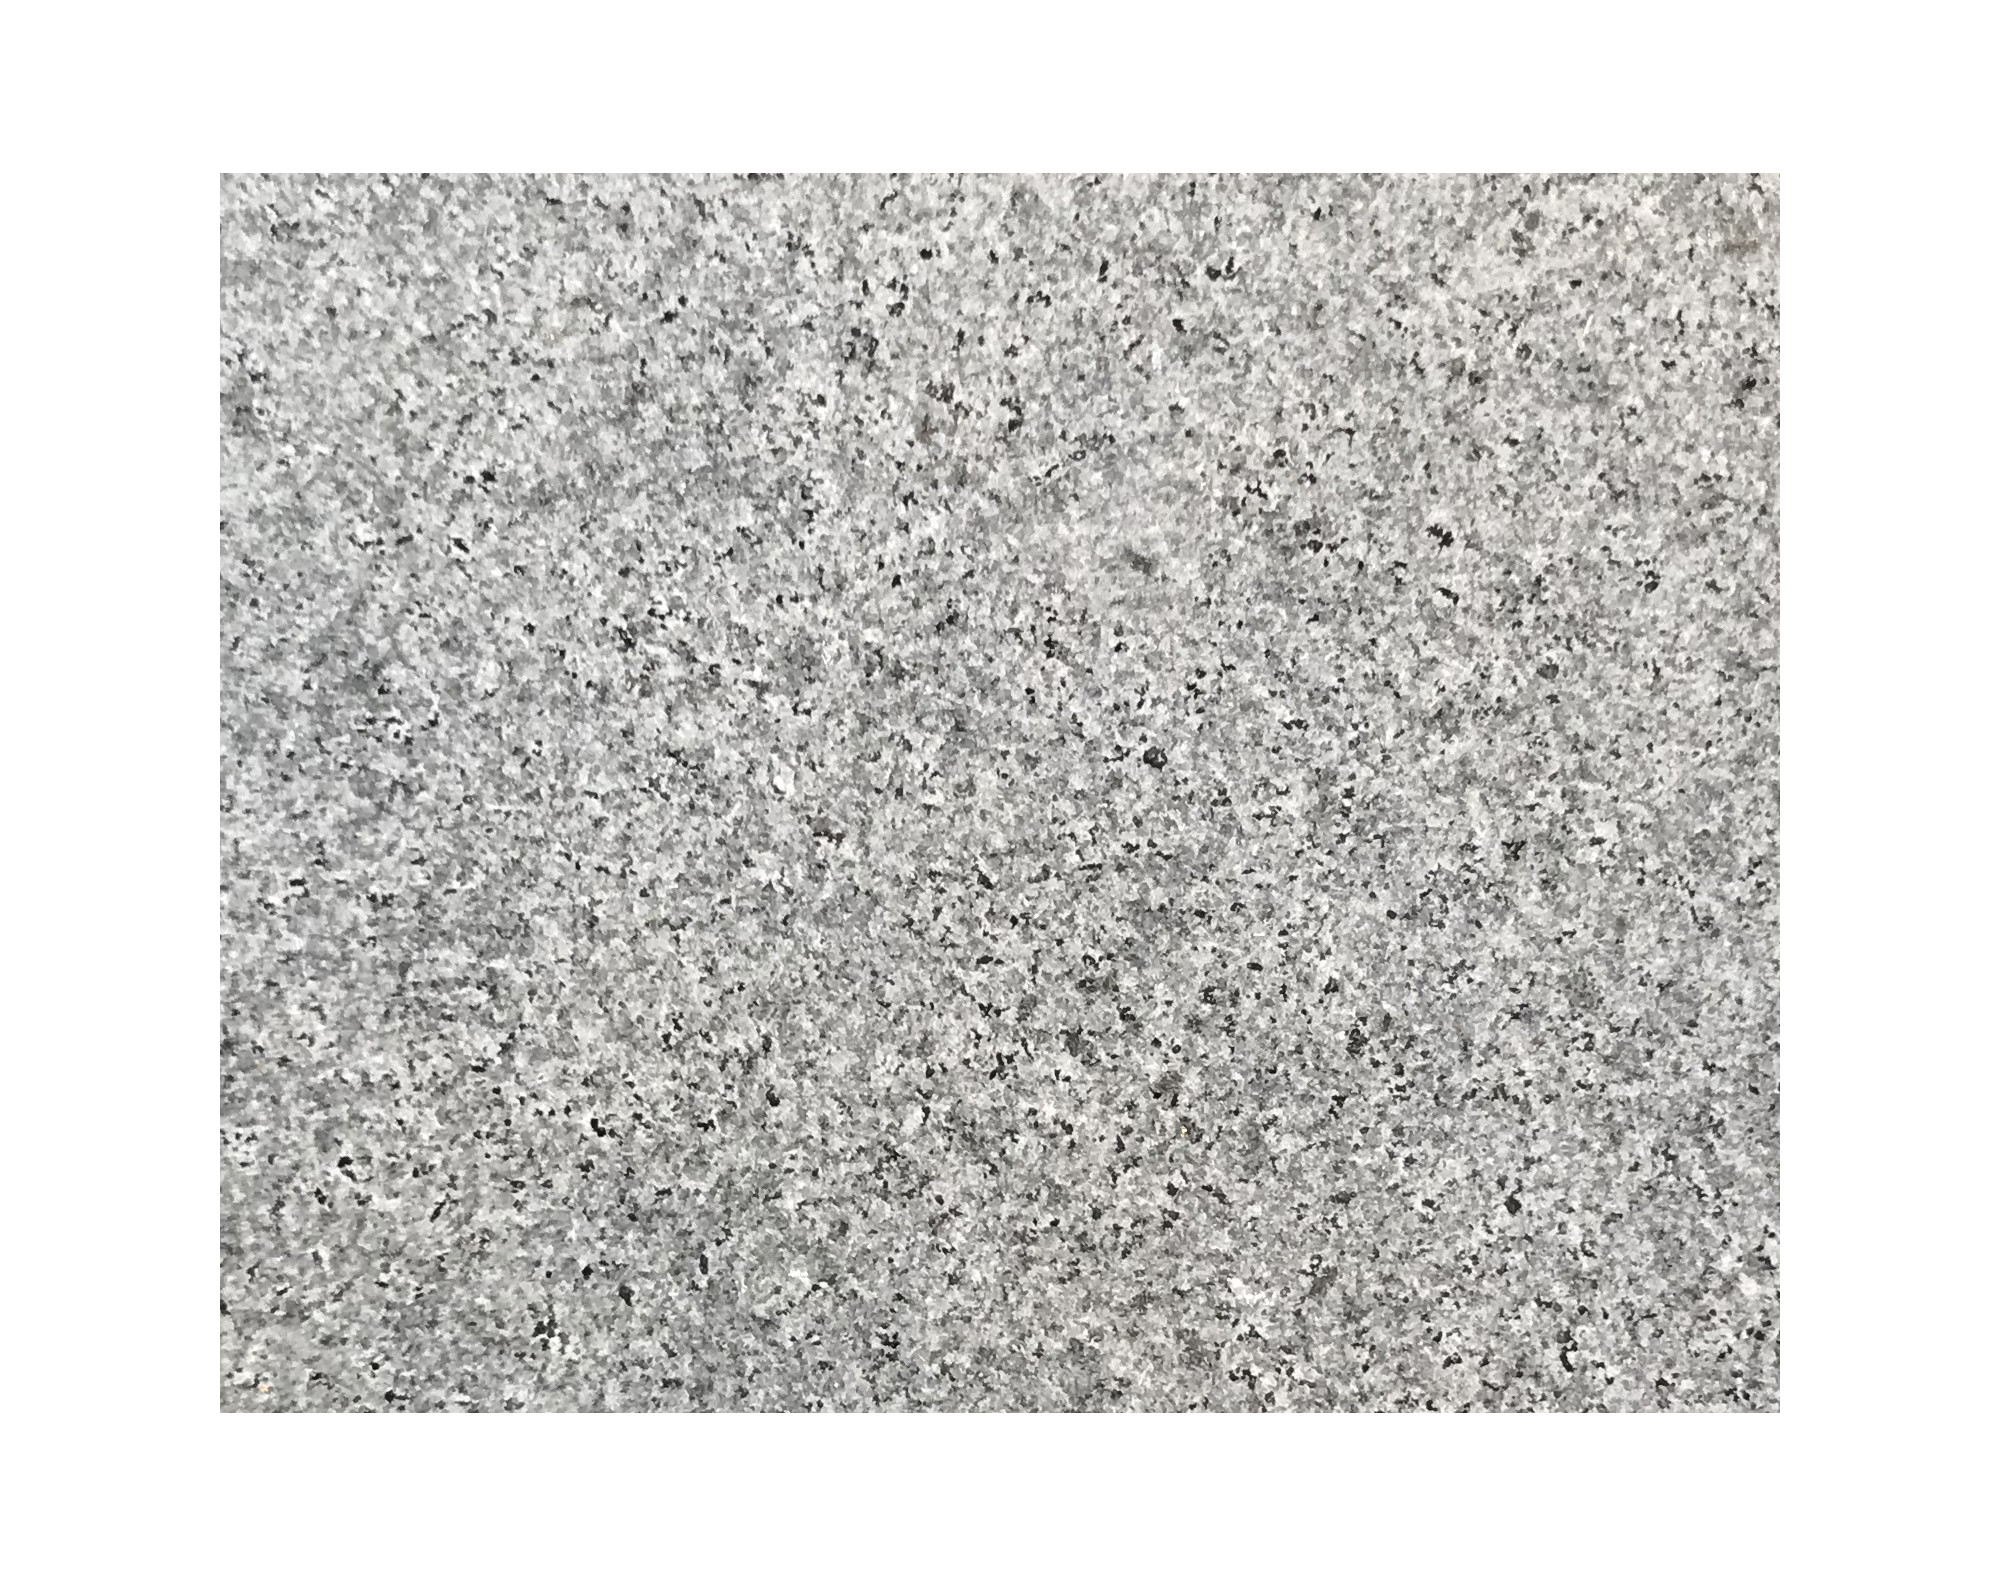 Harmo roc napoliset, natura-serie, ovaal d: 5,00mx10,30, berggrijs , graniet